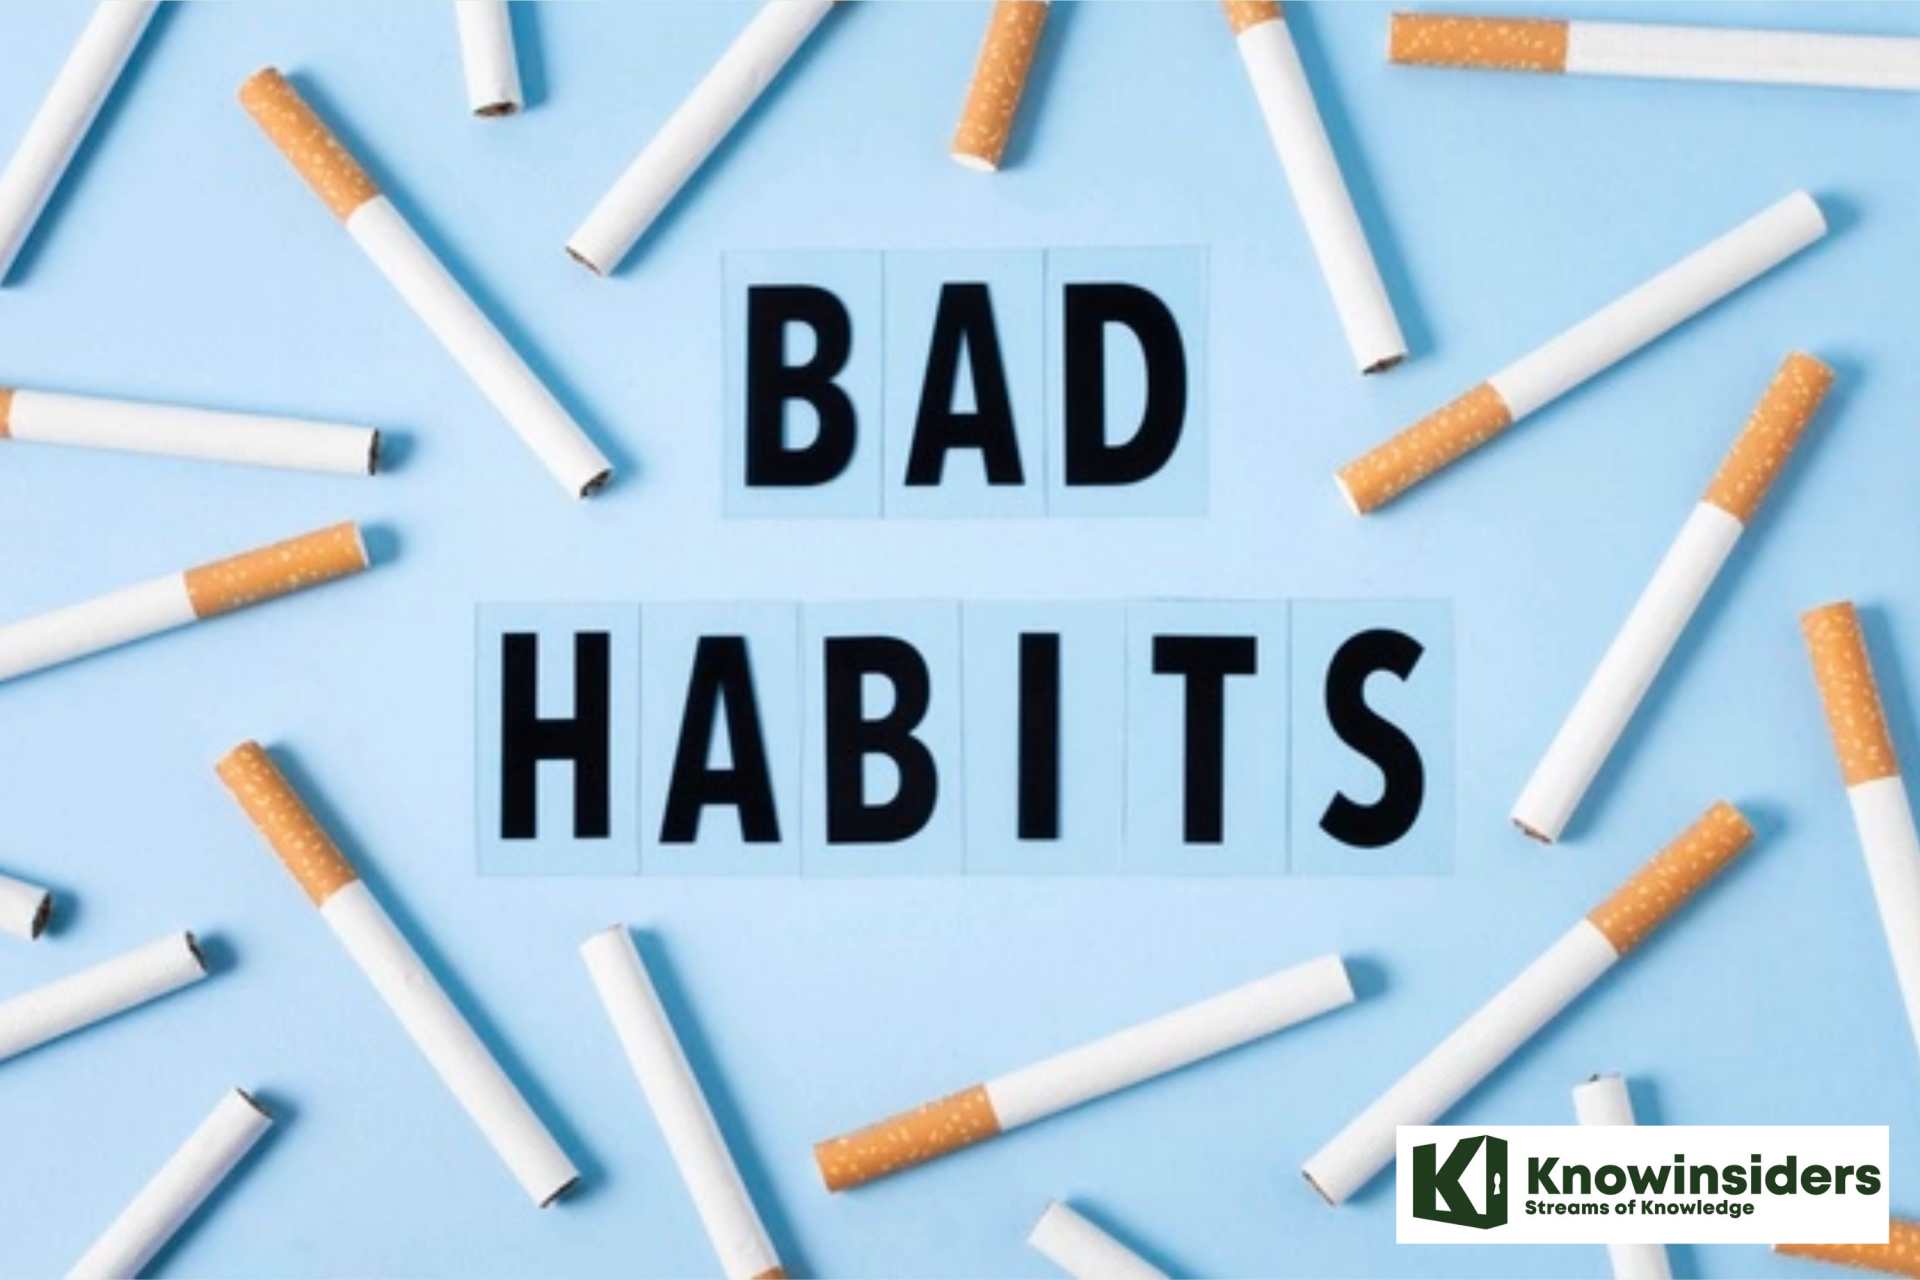 List of 150+ Bad Habits to Avoid